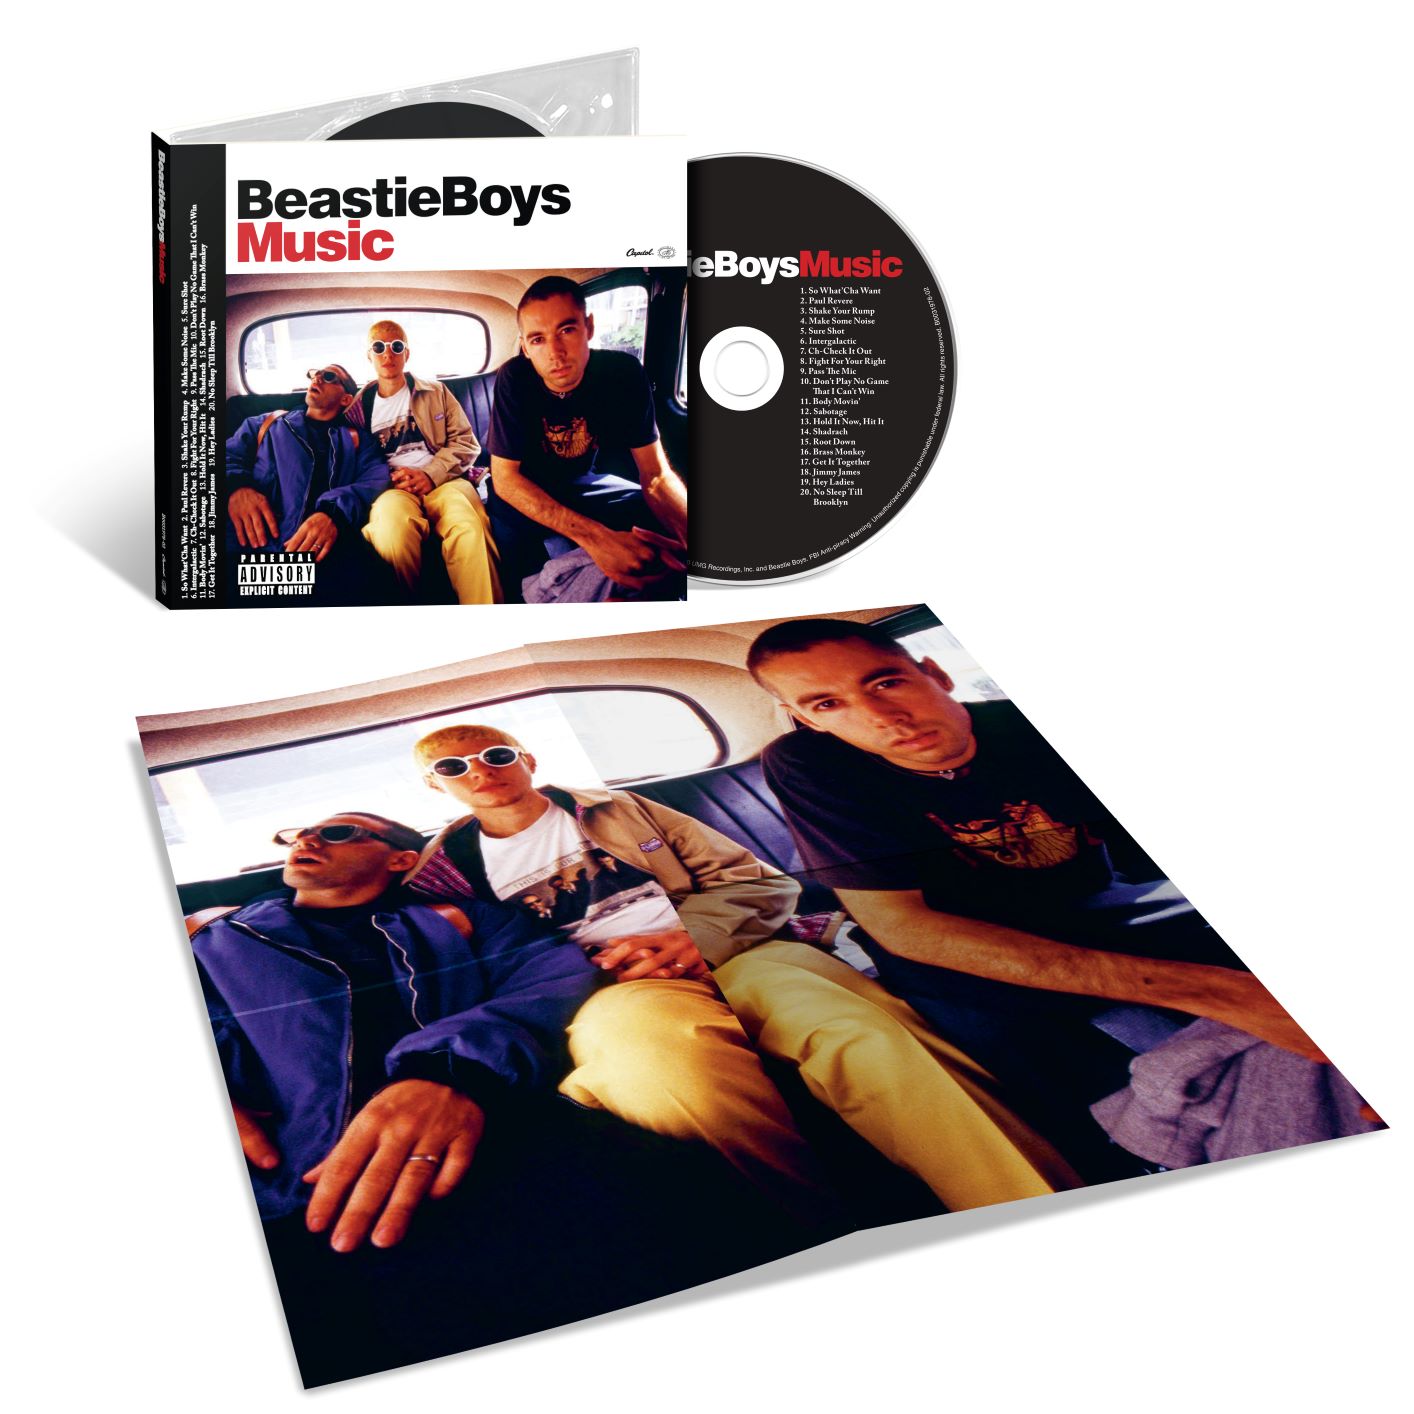 Beastie Boys | Beastie Boys Music [Explicit Content] (Digipack Packaging) | CD